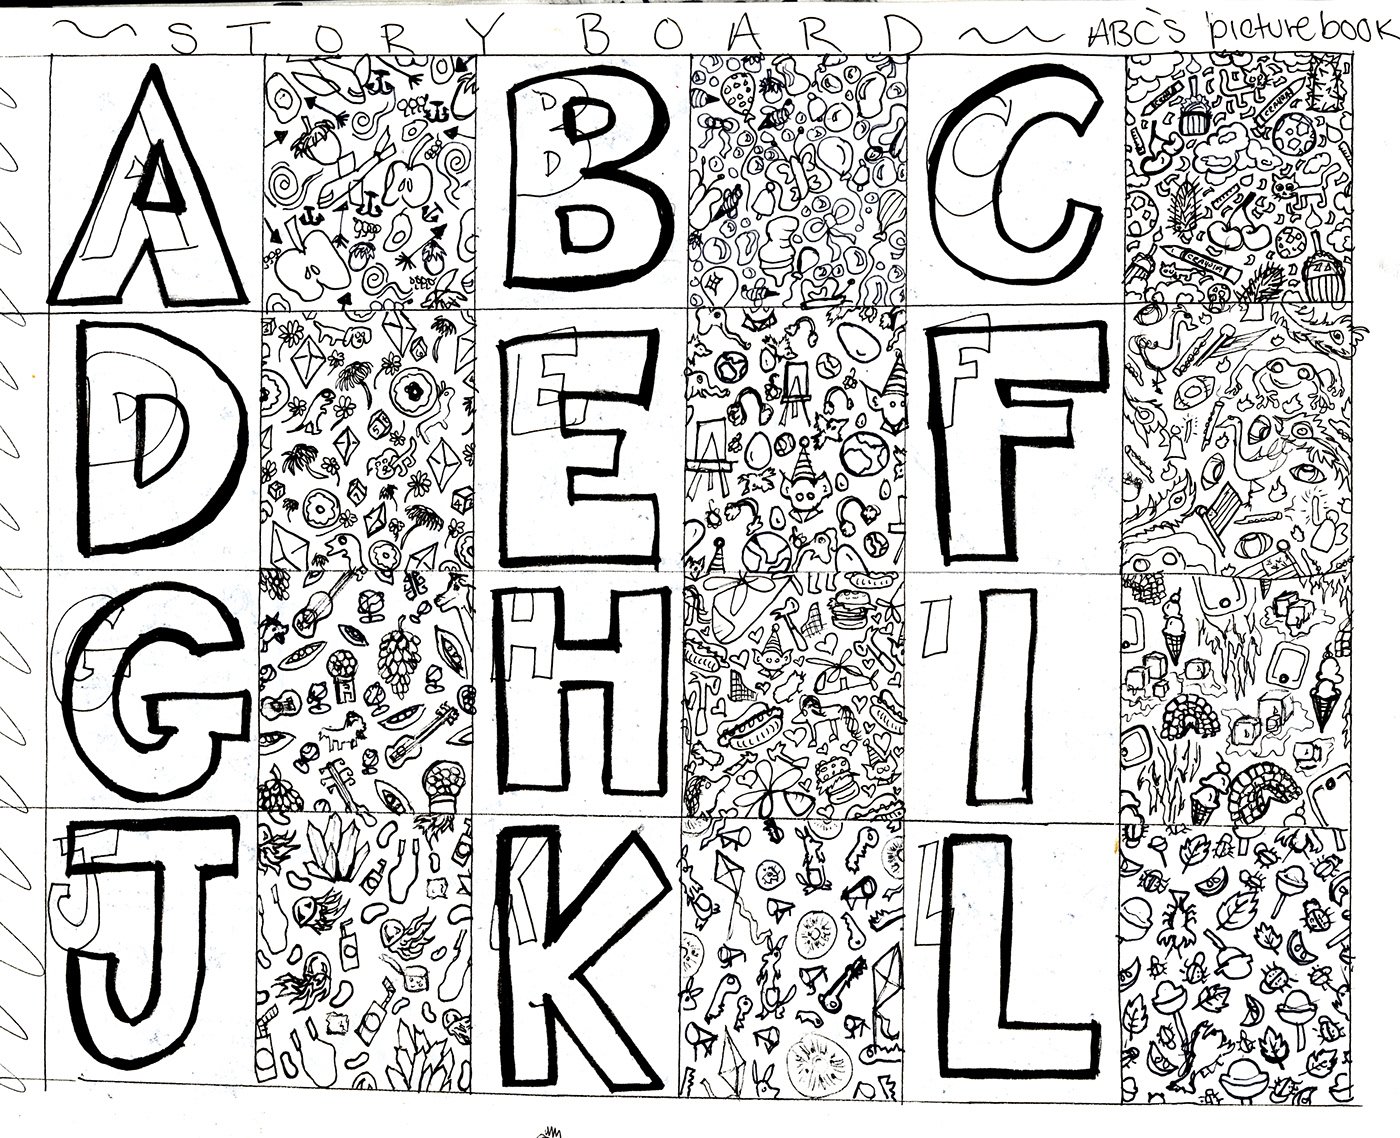 seek and find alphabet book children book ILLUSTRATION  book illustration Repeat Pattern Surface Designer